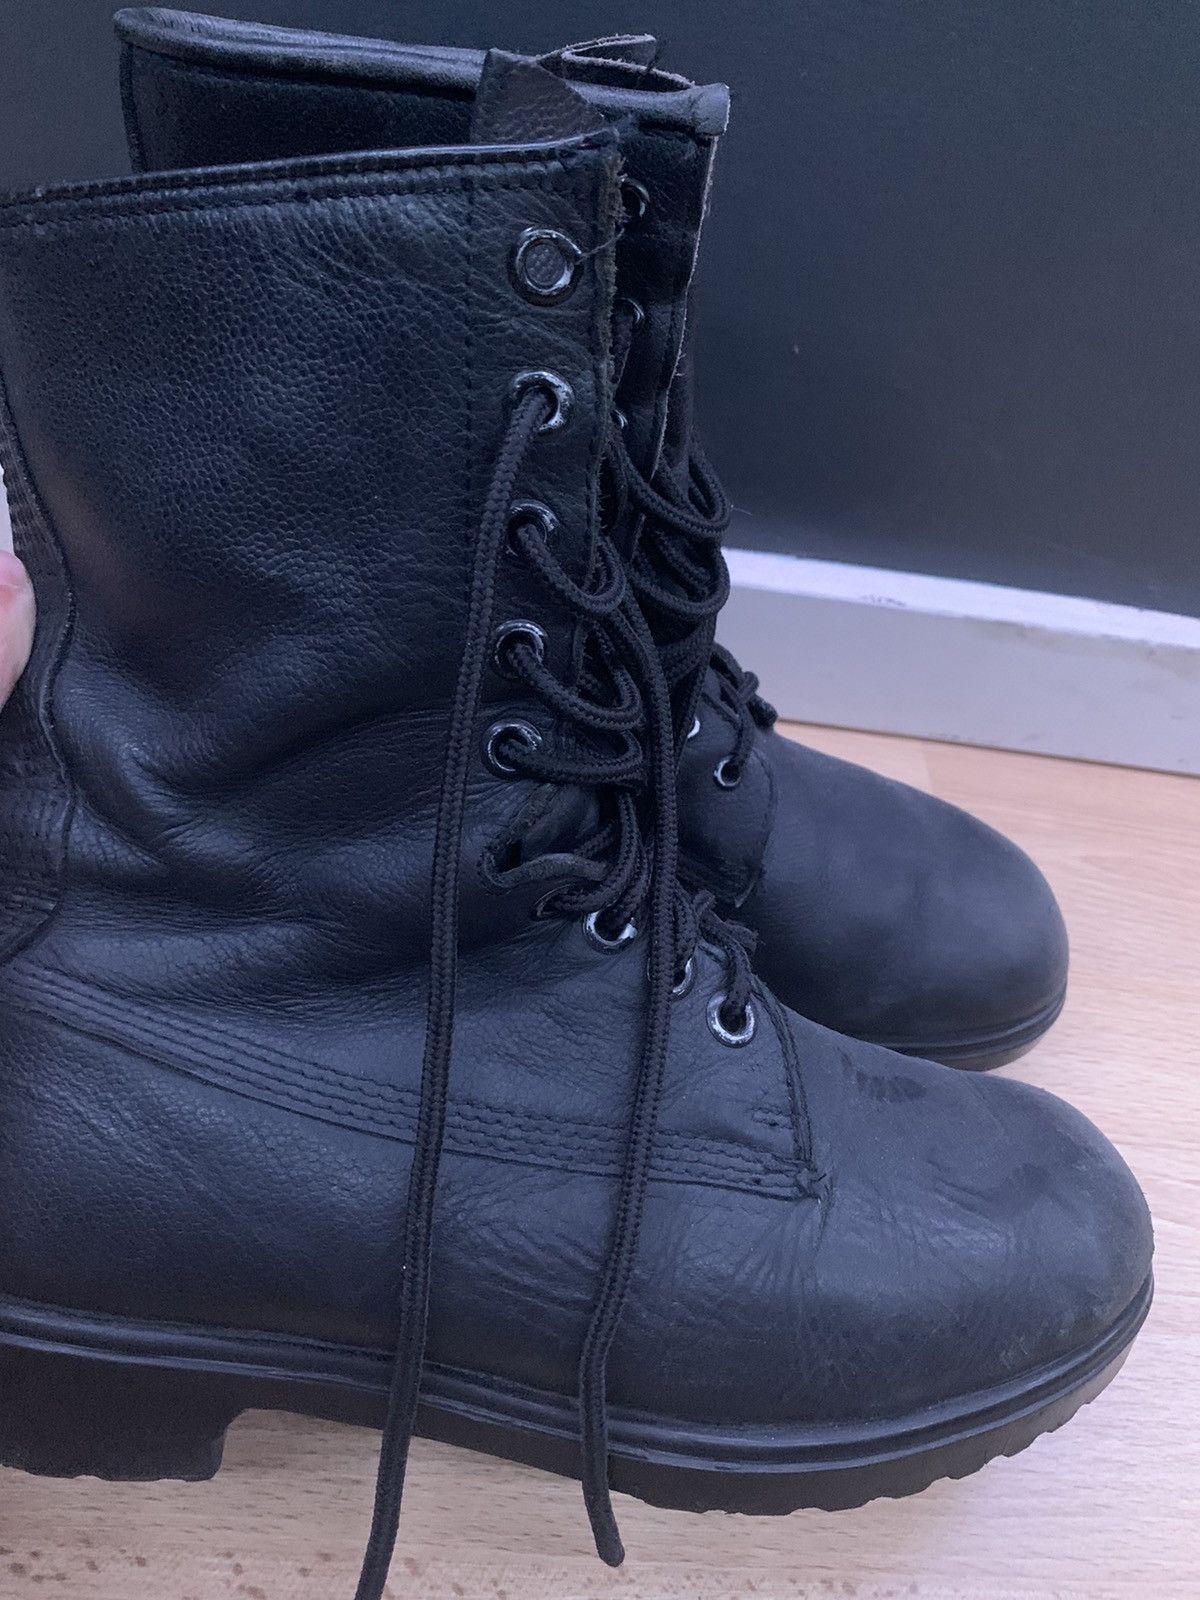 Vintage Vintage Leather Military Boots Size US 9 / EU 42 - 5 Thumbnail